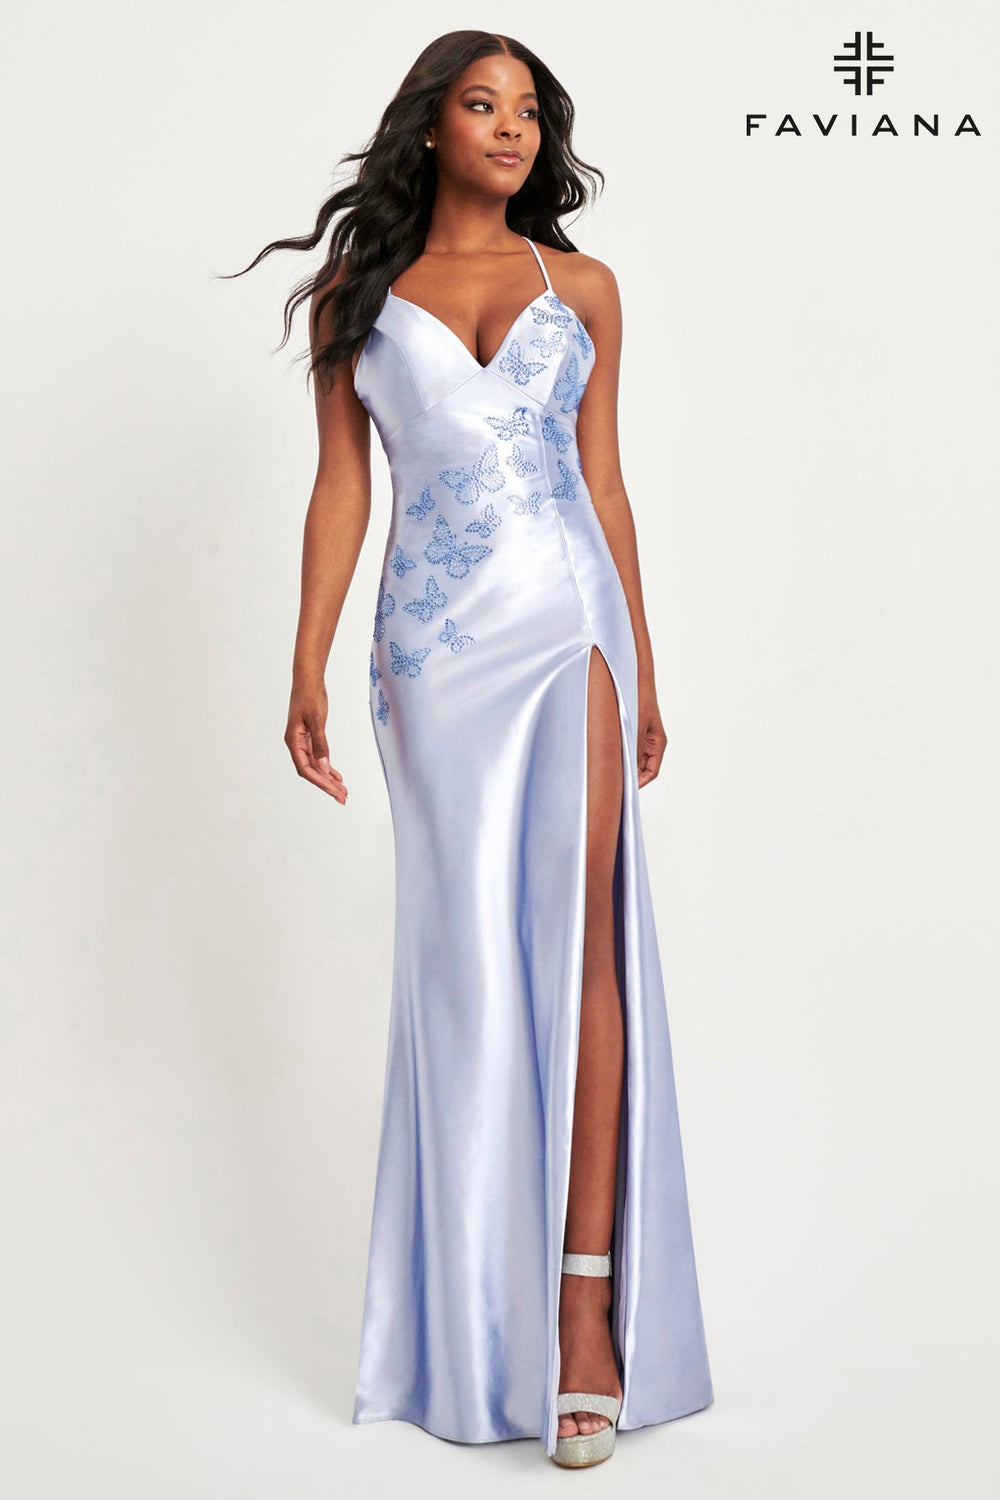 Faviana Prom Dress Faviana 11053 Dress